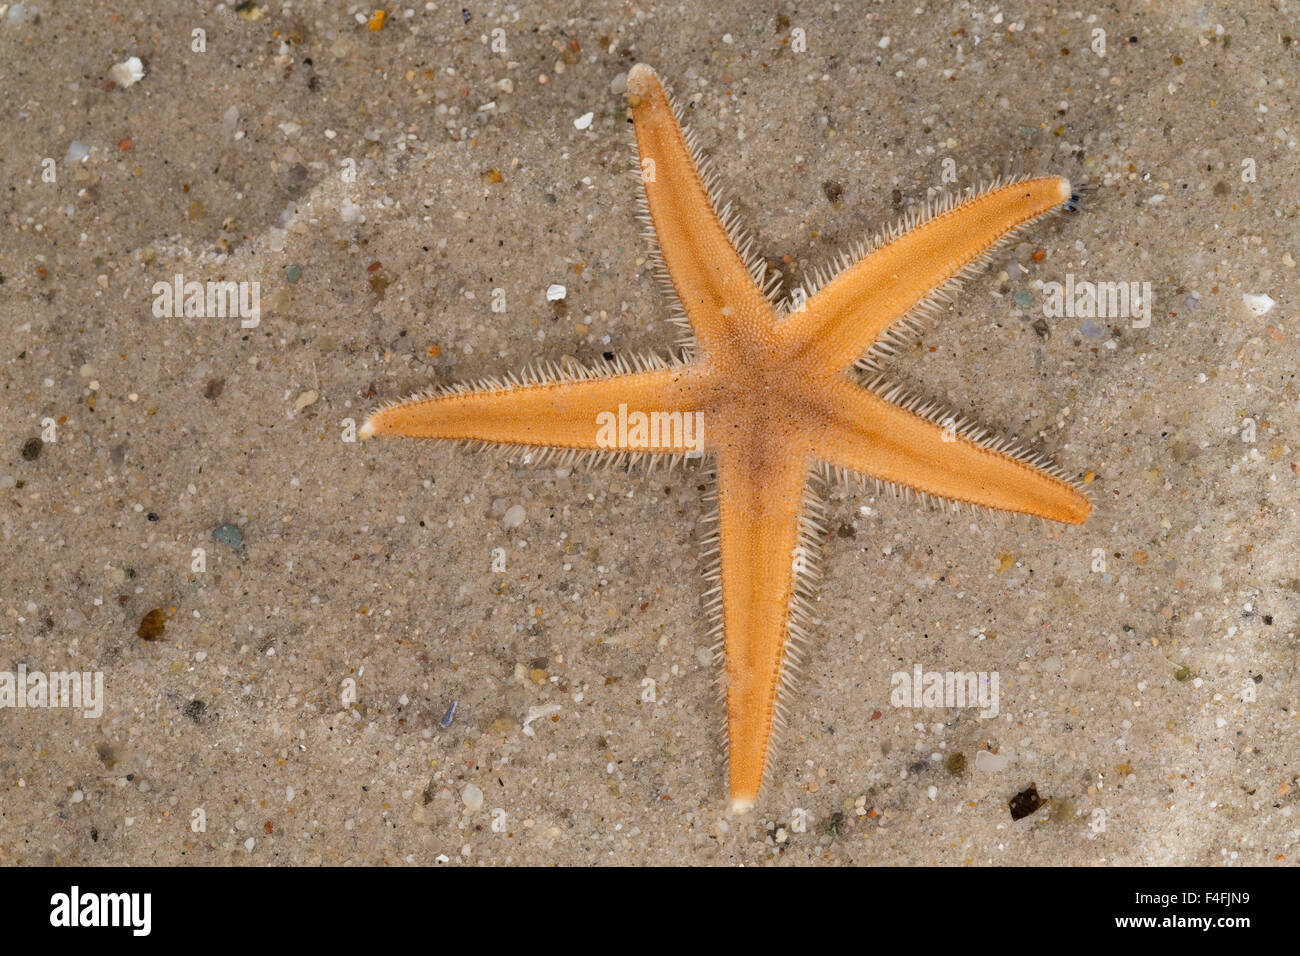 Seestern, Luidia sarsii, Luidia sarsi, starfish, starfishes, sea-star, seastar, sea-stars, Seesterne Stock Photo